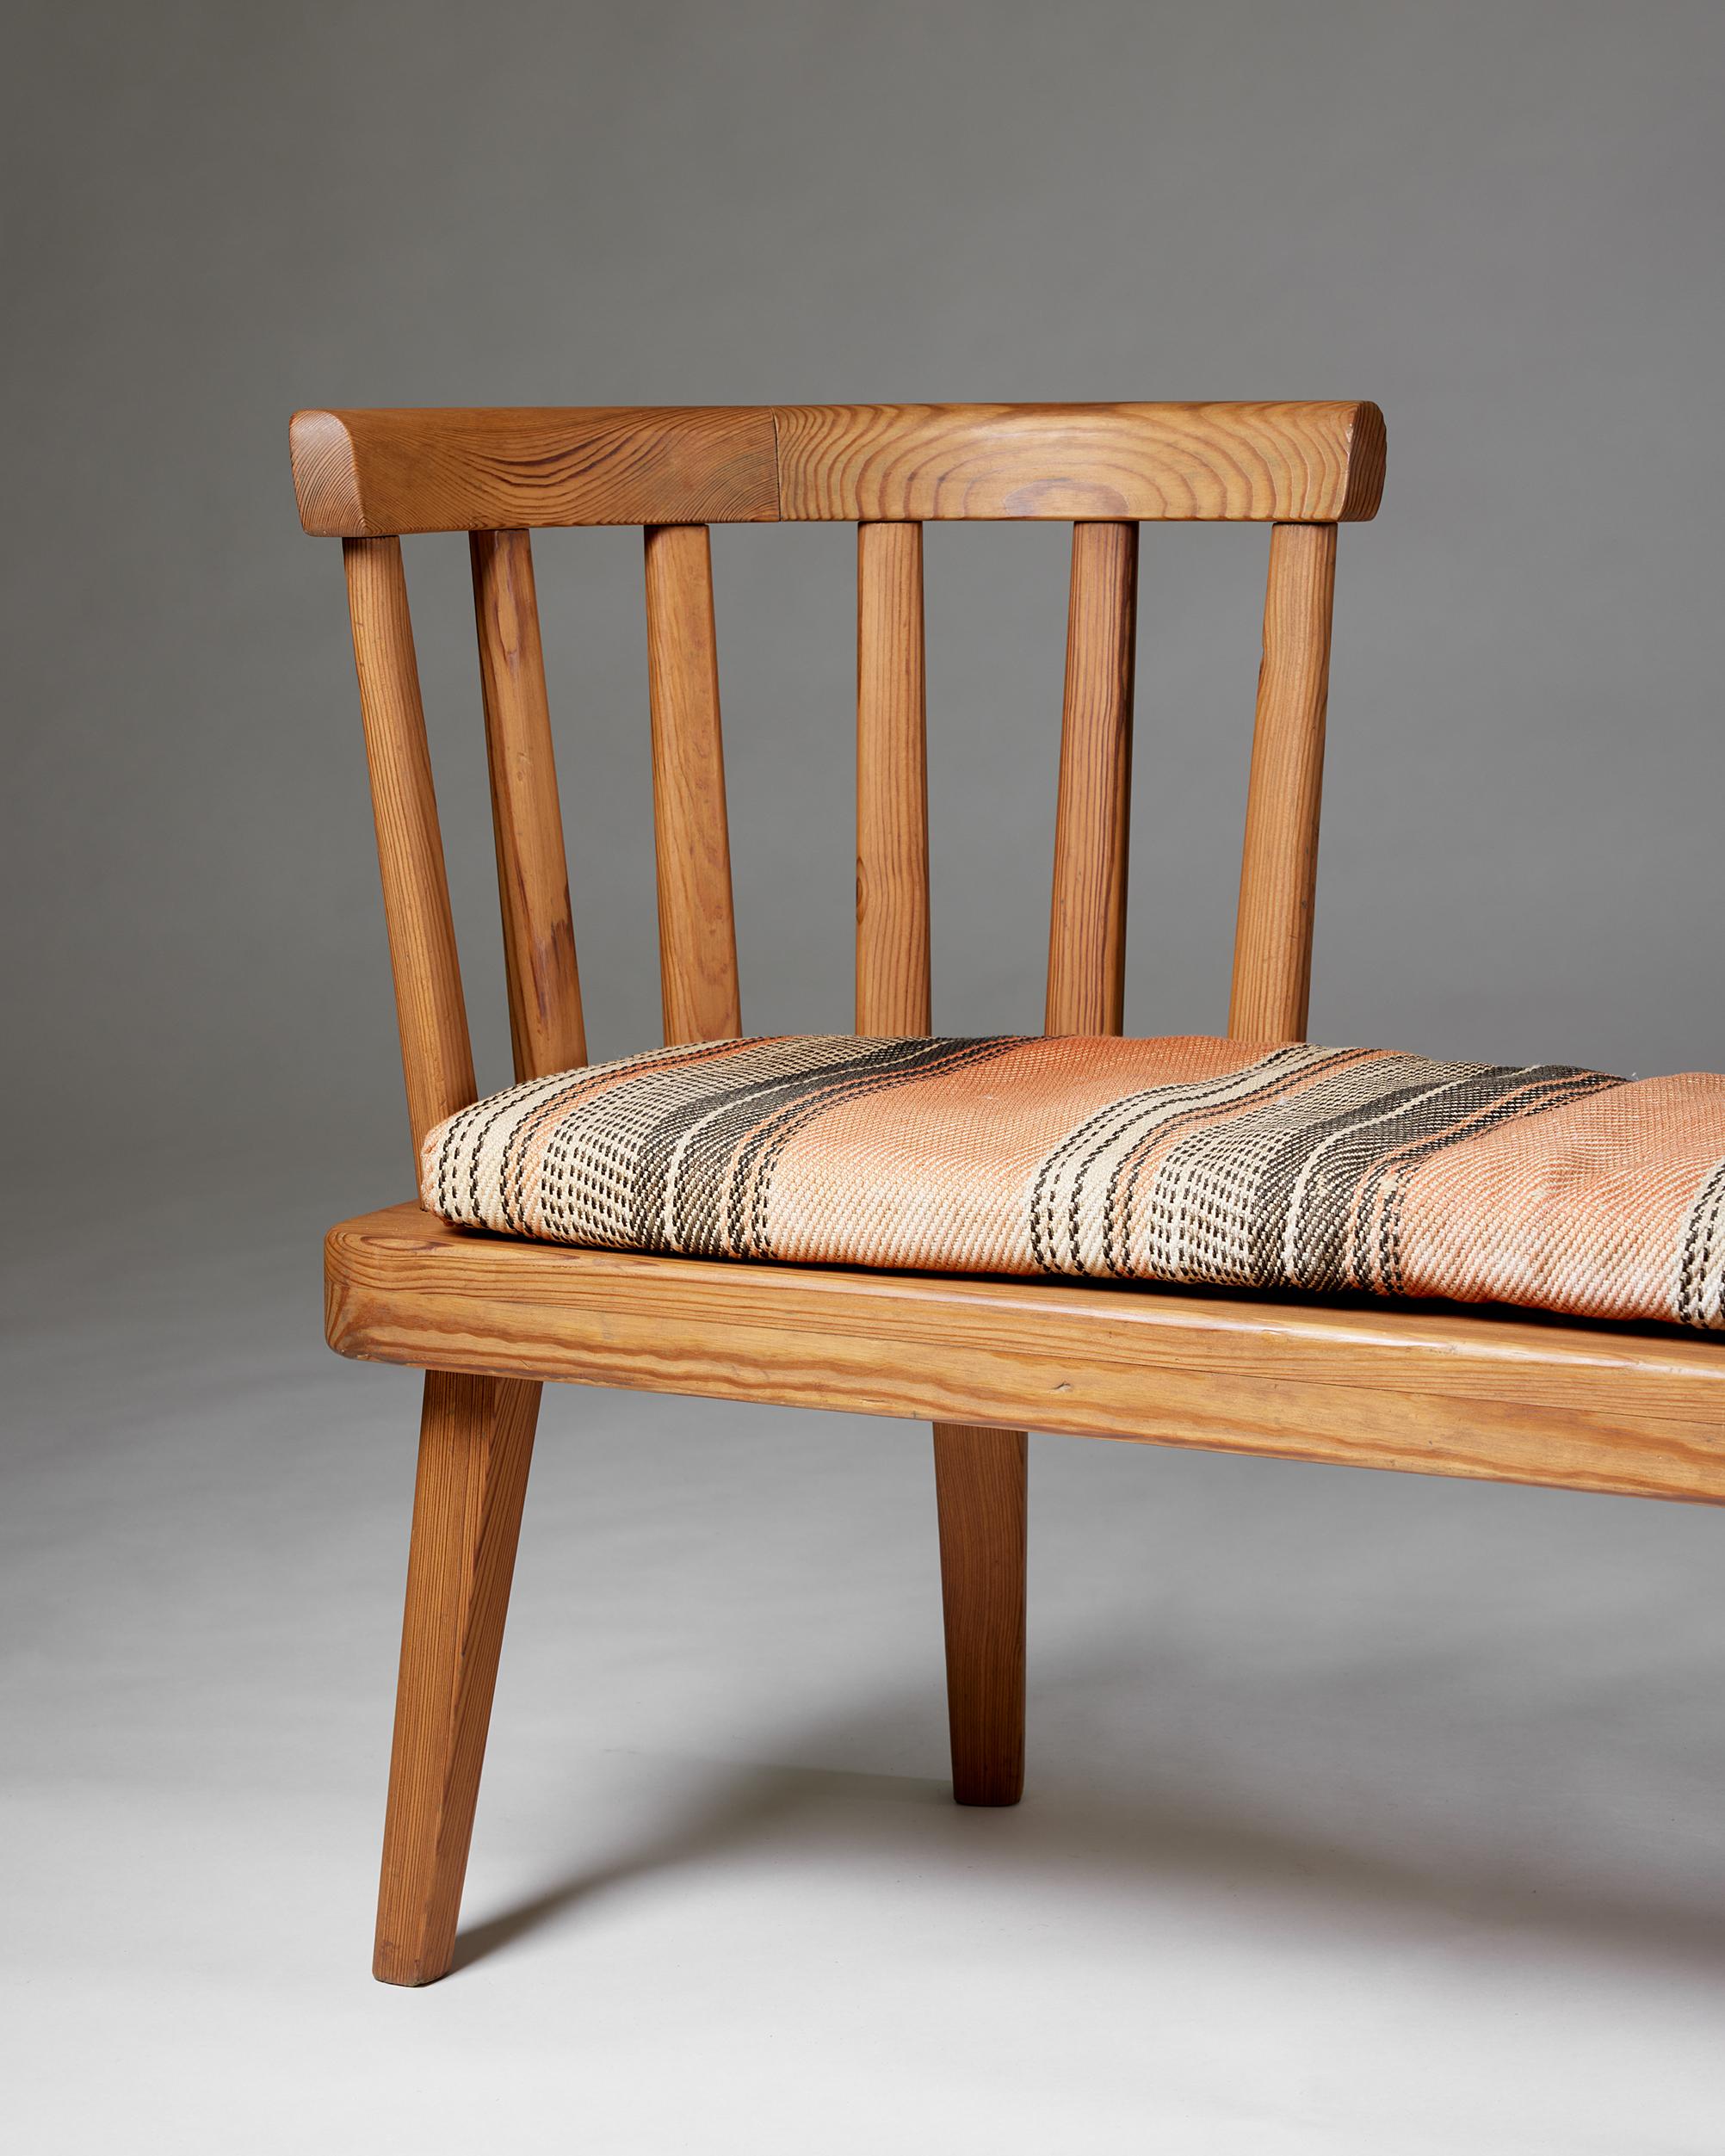 Pine Sofa ‘Utö’ designed by Axel Einar Hjorth for Nordiska Kompaniet, Sweden, 1930s For Sale